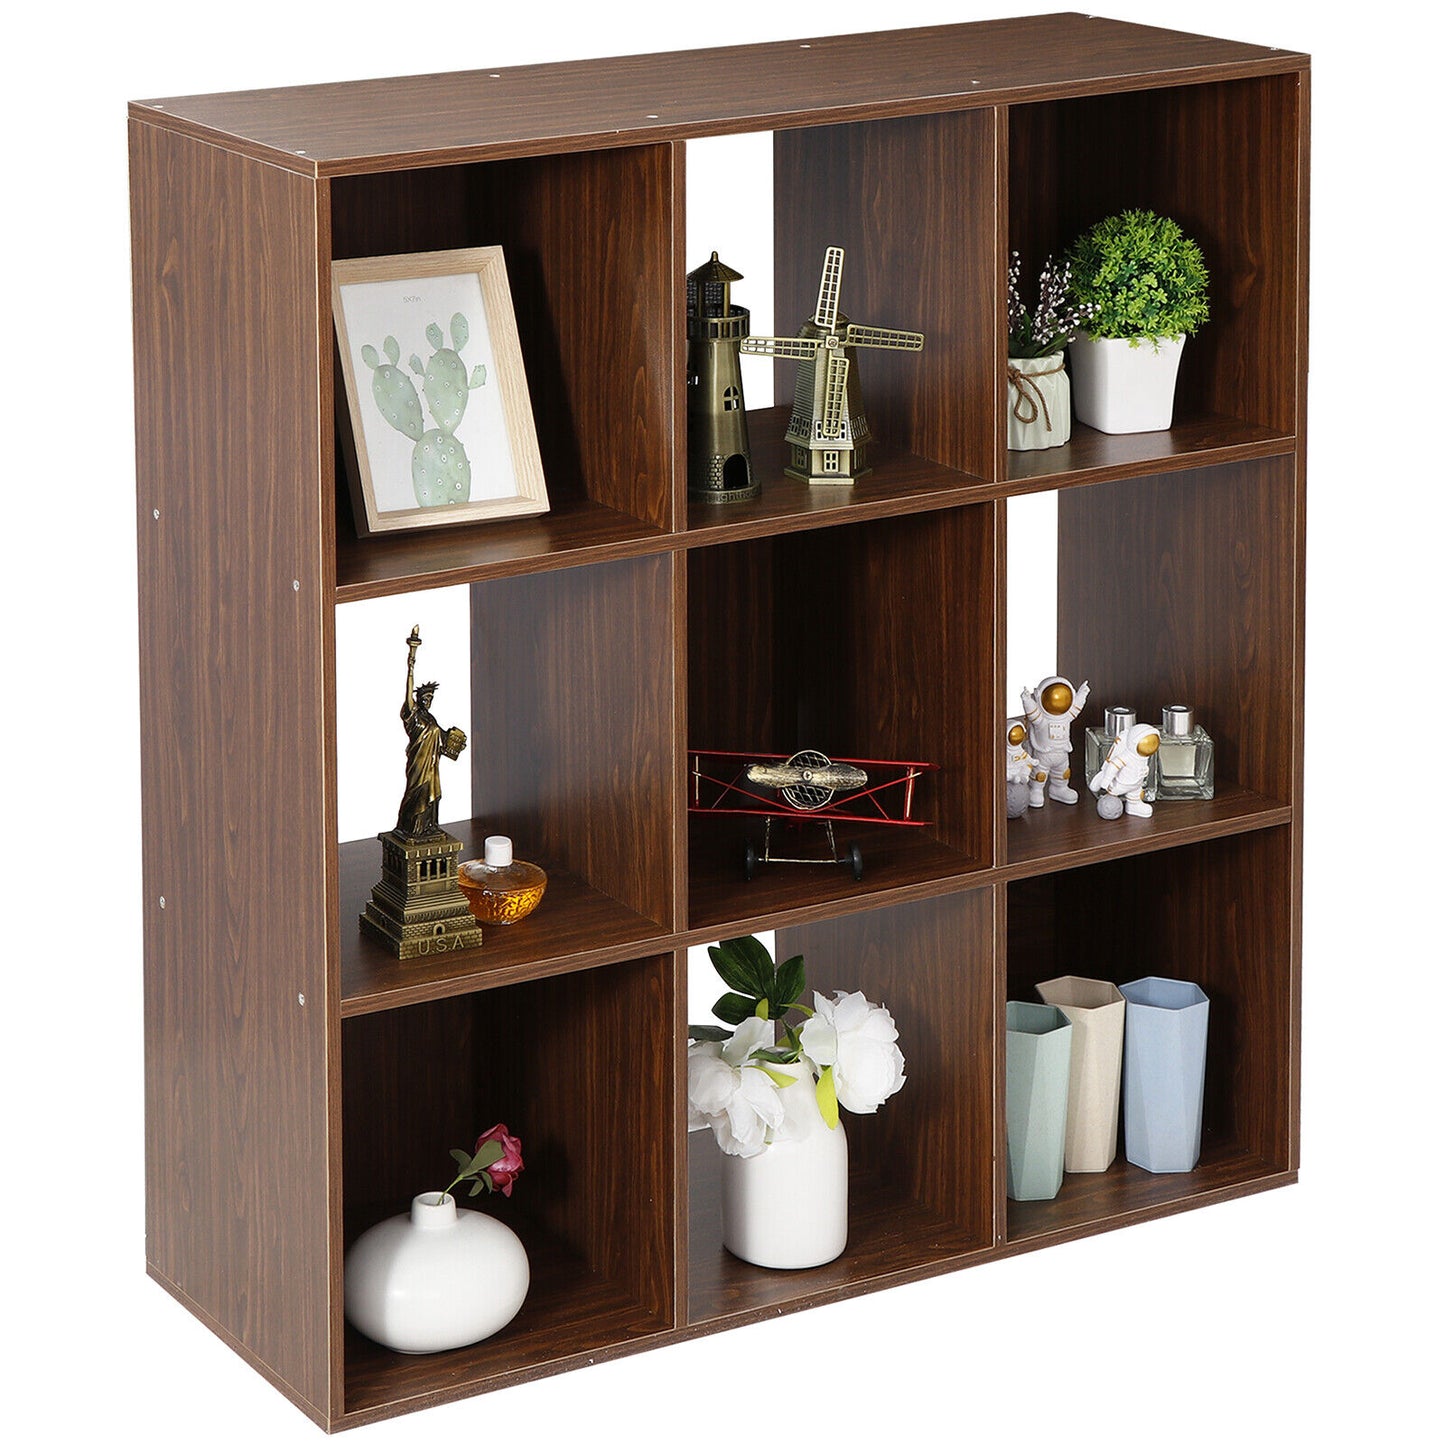 9 Cube Storage Shelf Organizer Wood Bookshelf Display with 5 Back Panels Brown